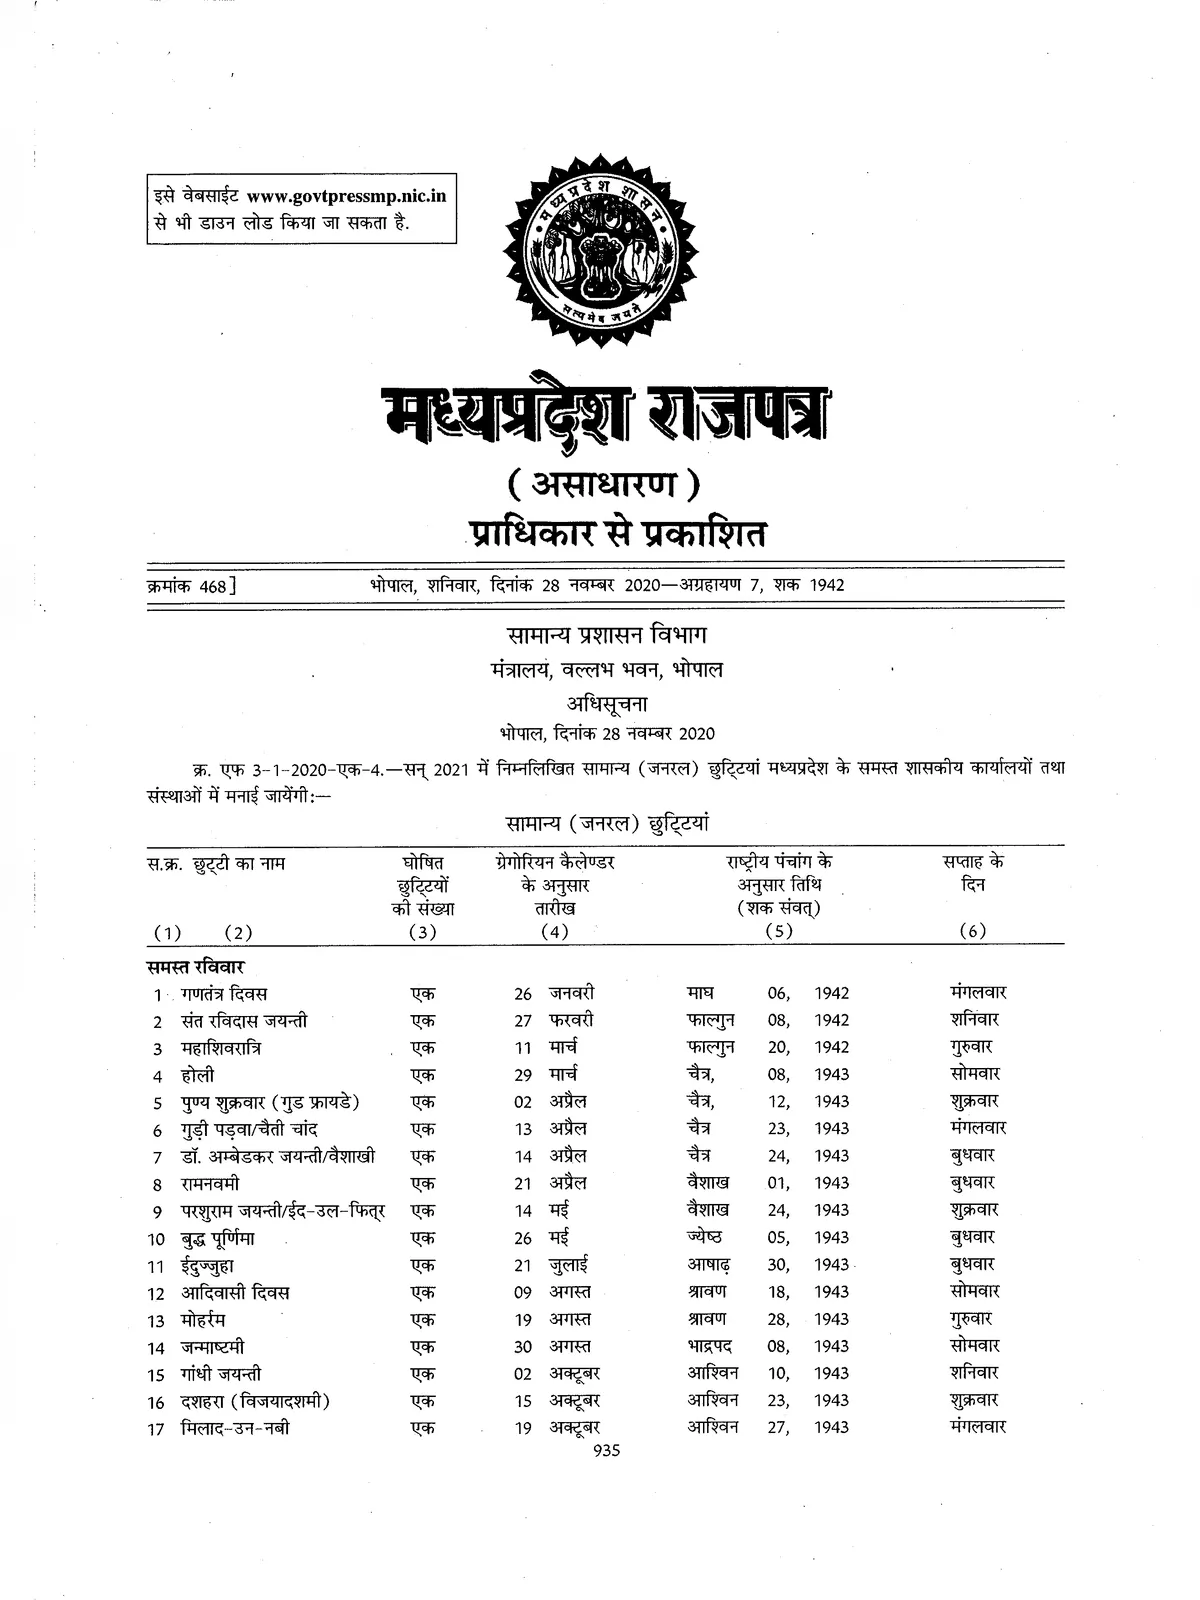 Madhya Pradesh Government Holidays List 2021